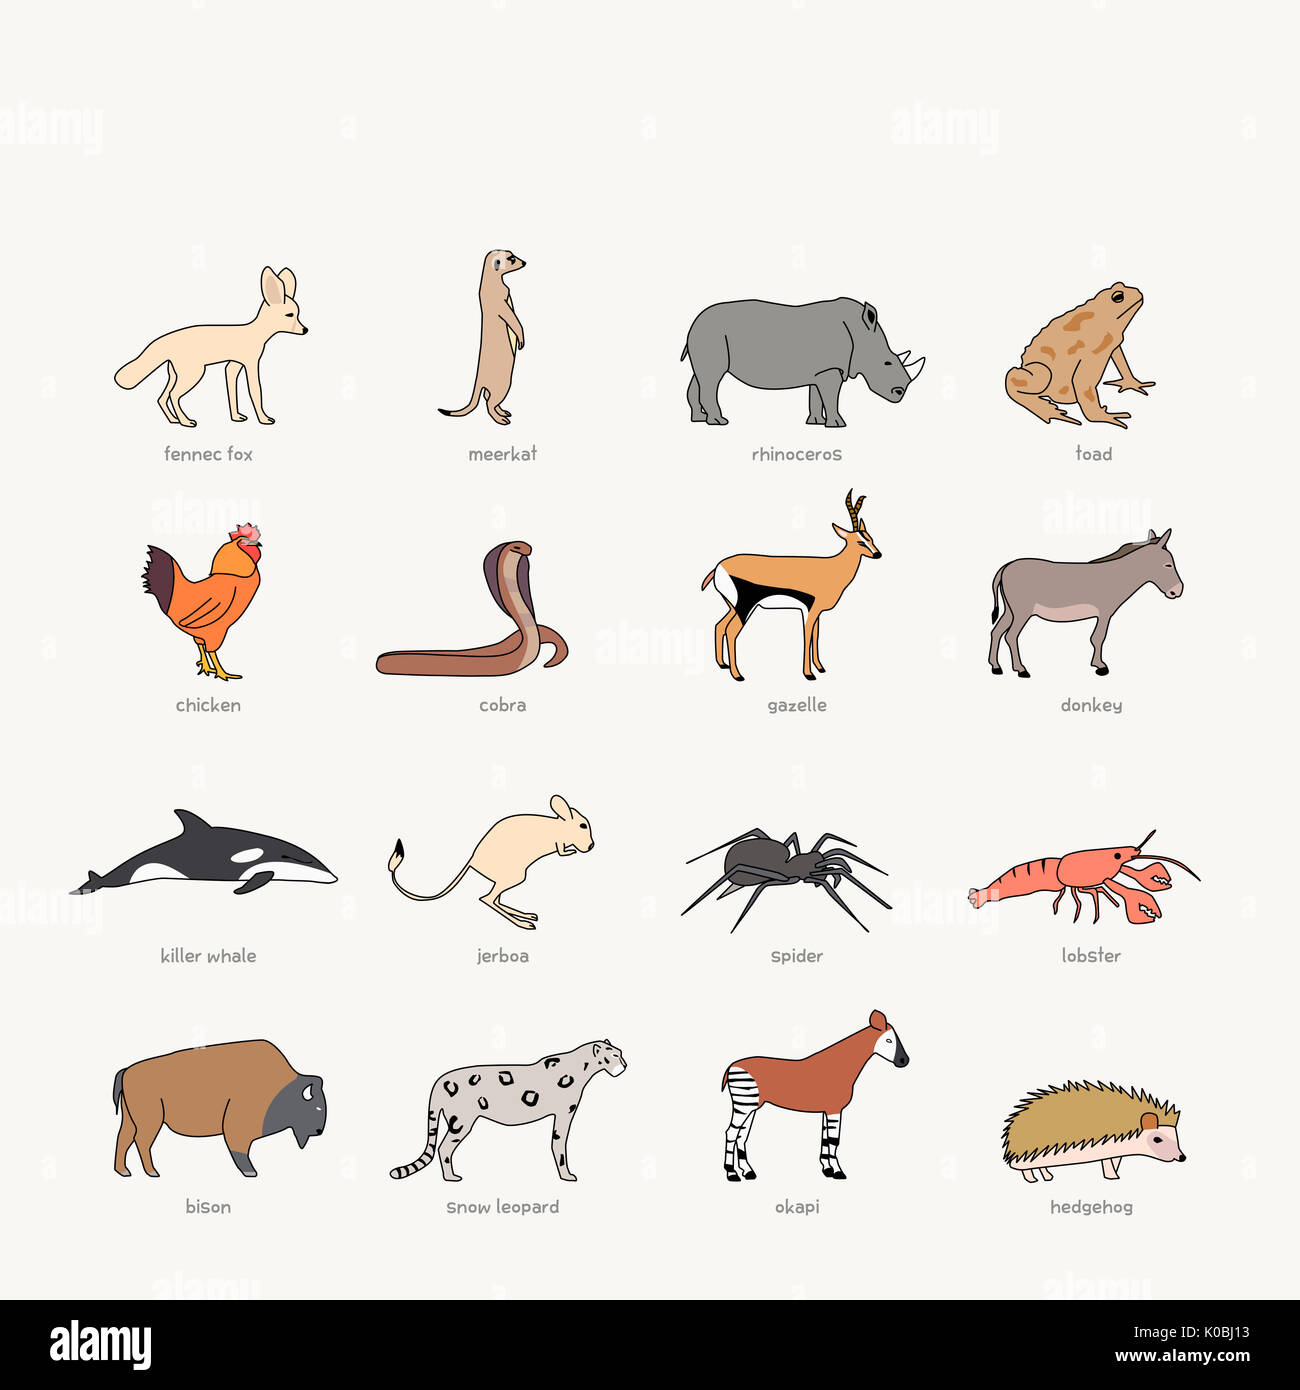 Icons of various animals Stock Photo - Alamy